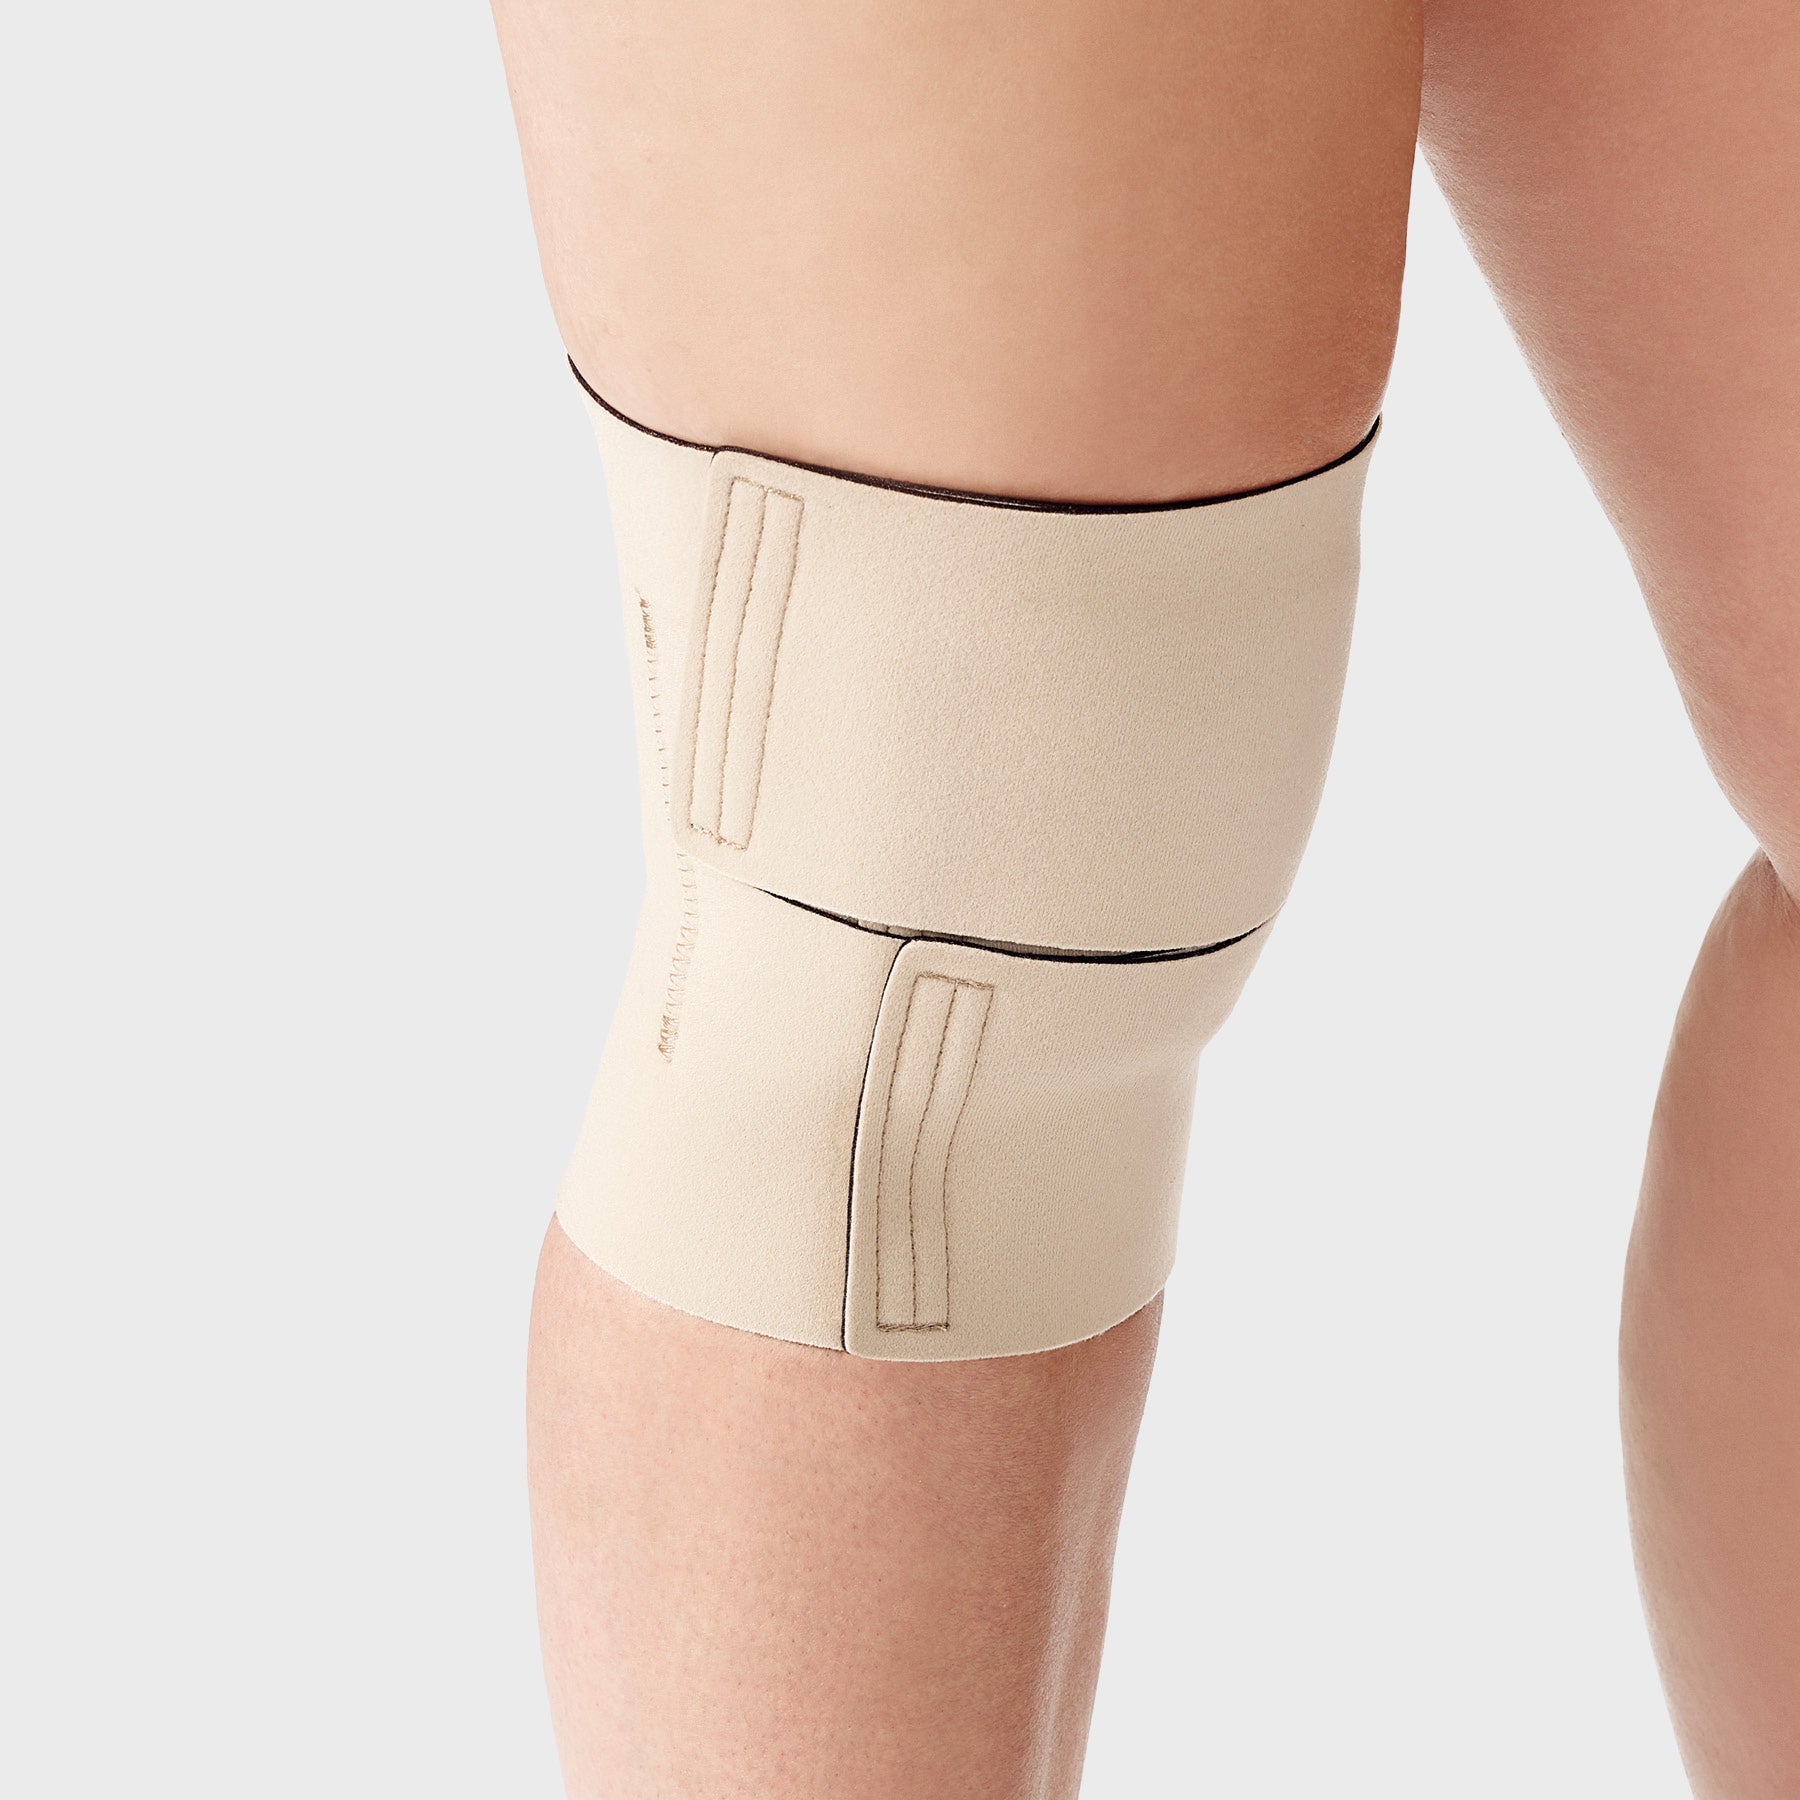 Tribute Wrap Knee to Thigh Garment, Foam Compression Wrap